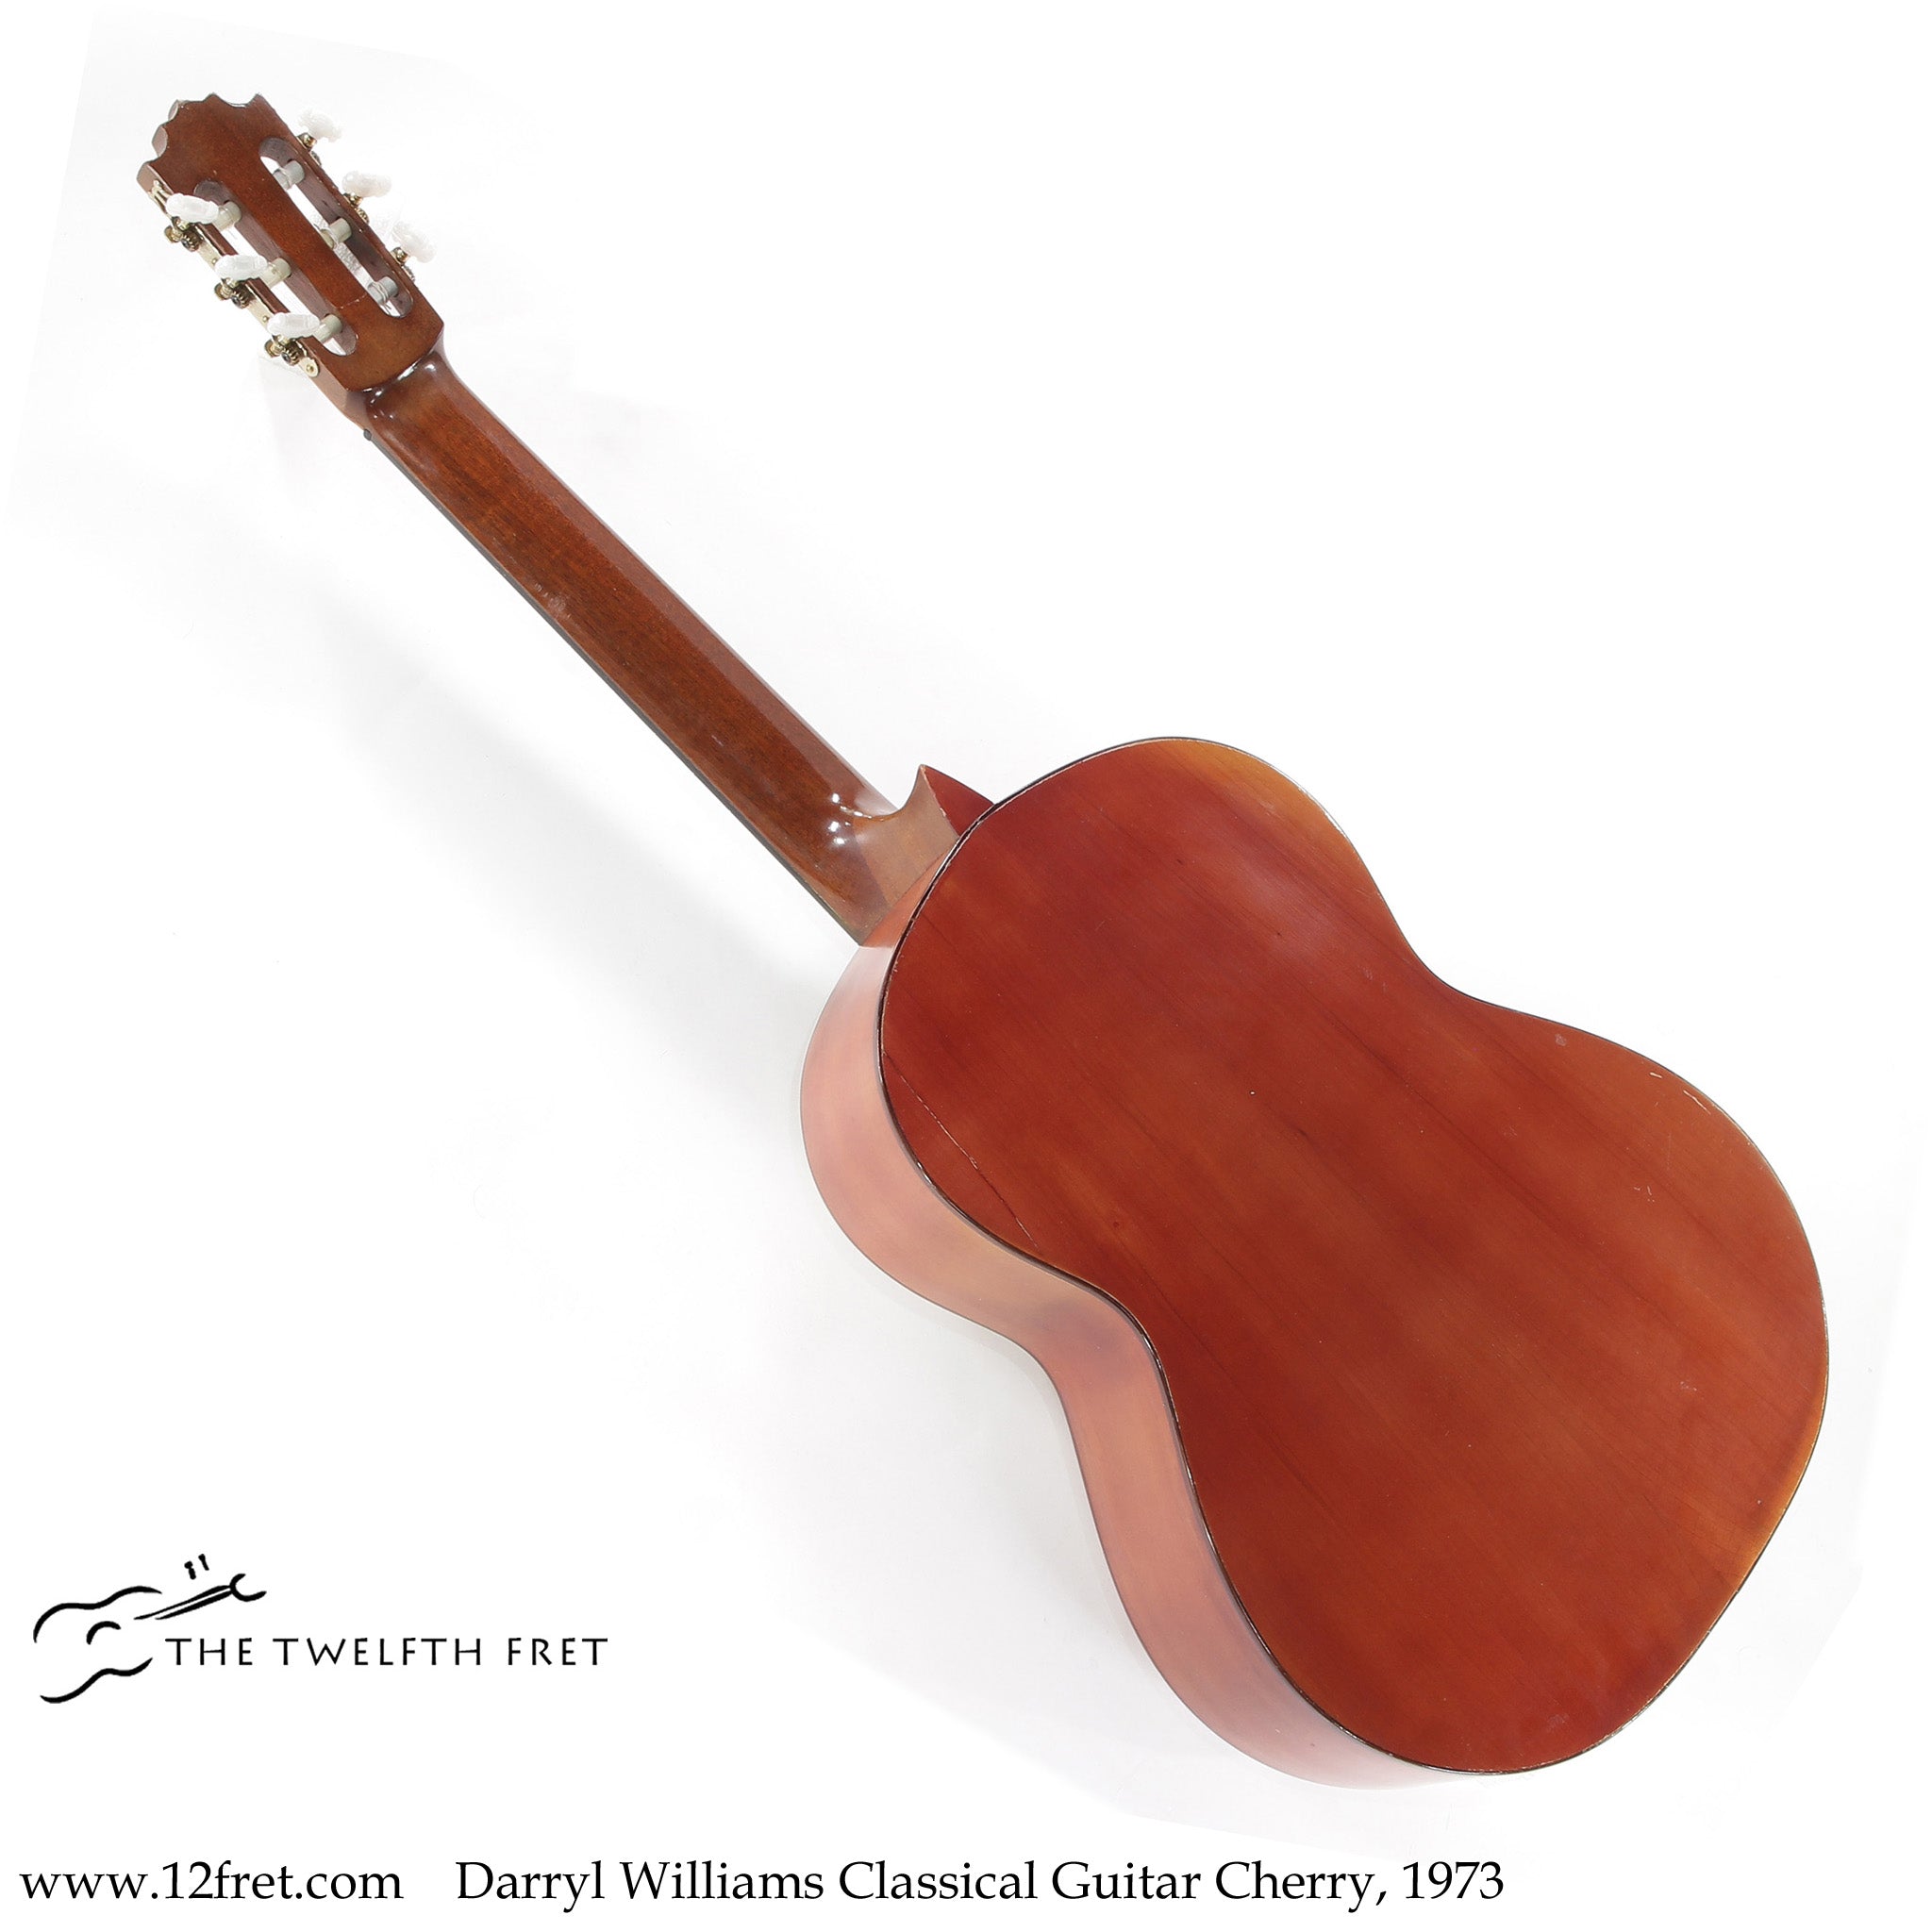 Darryl Williams Classical Guitar Cherry, 1973